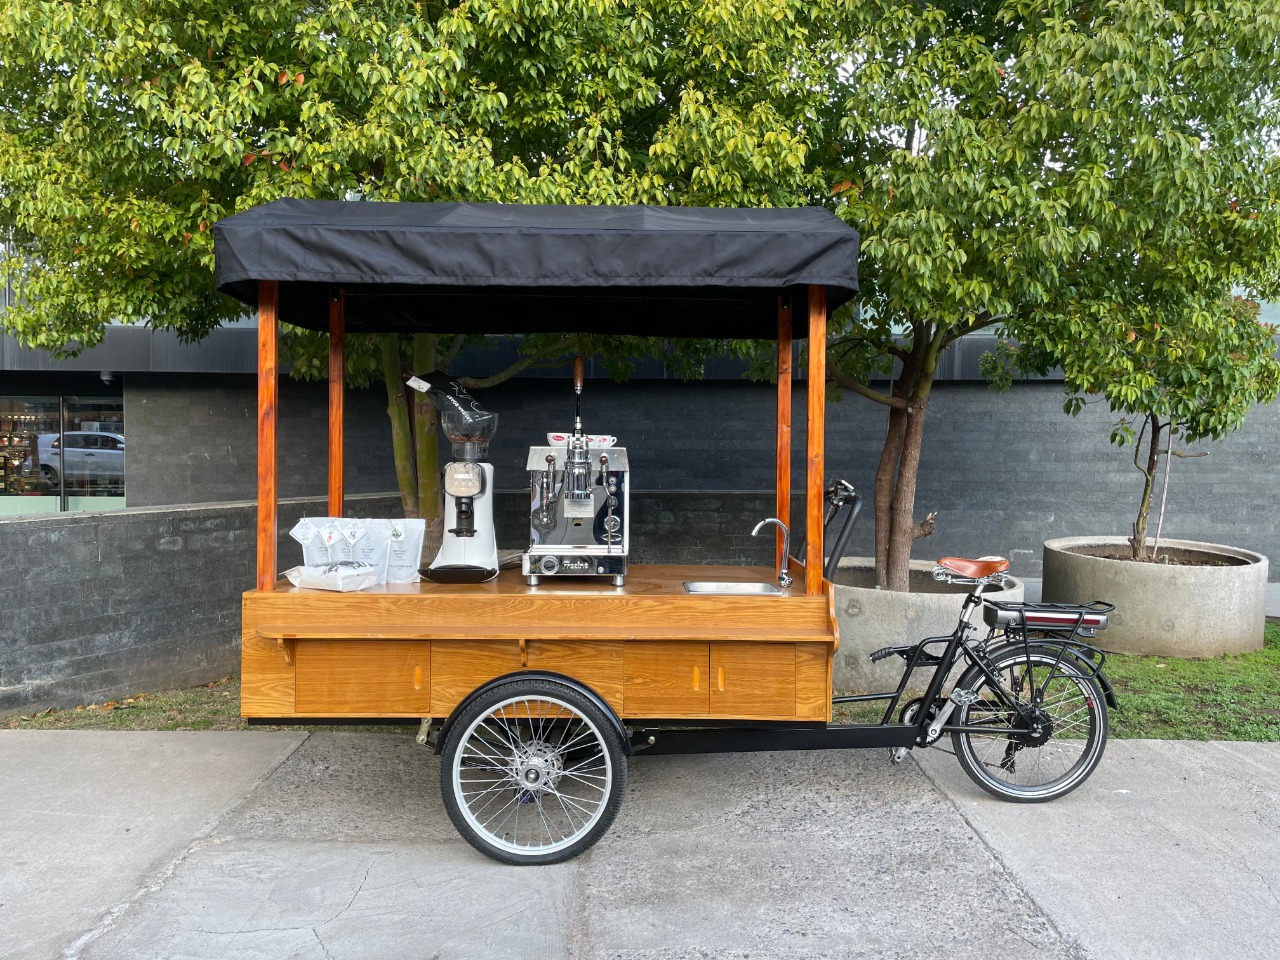 Fracino Chile | Cafeterias moviles con maquinas de cafe a gas Dual fuel